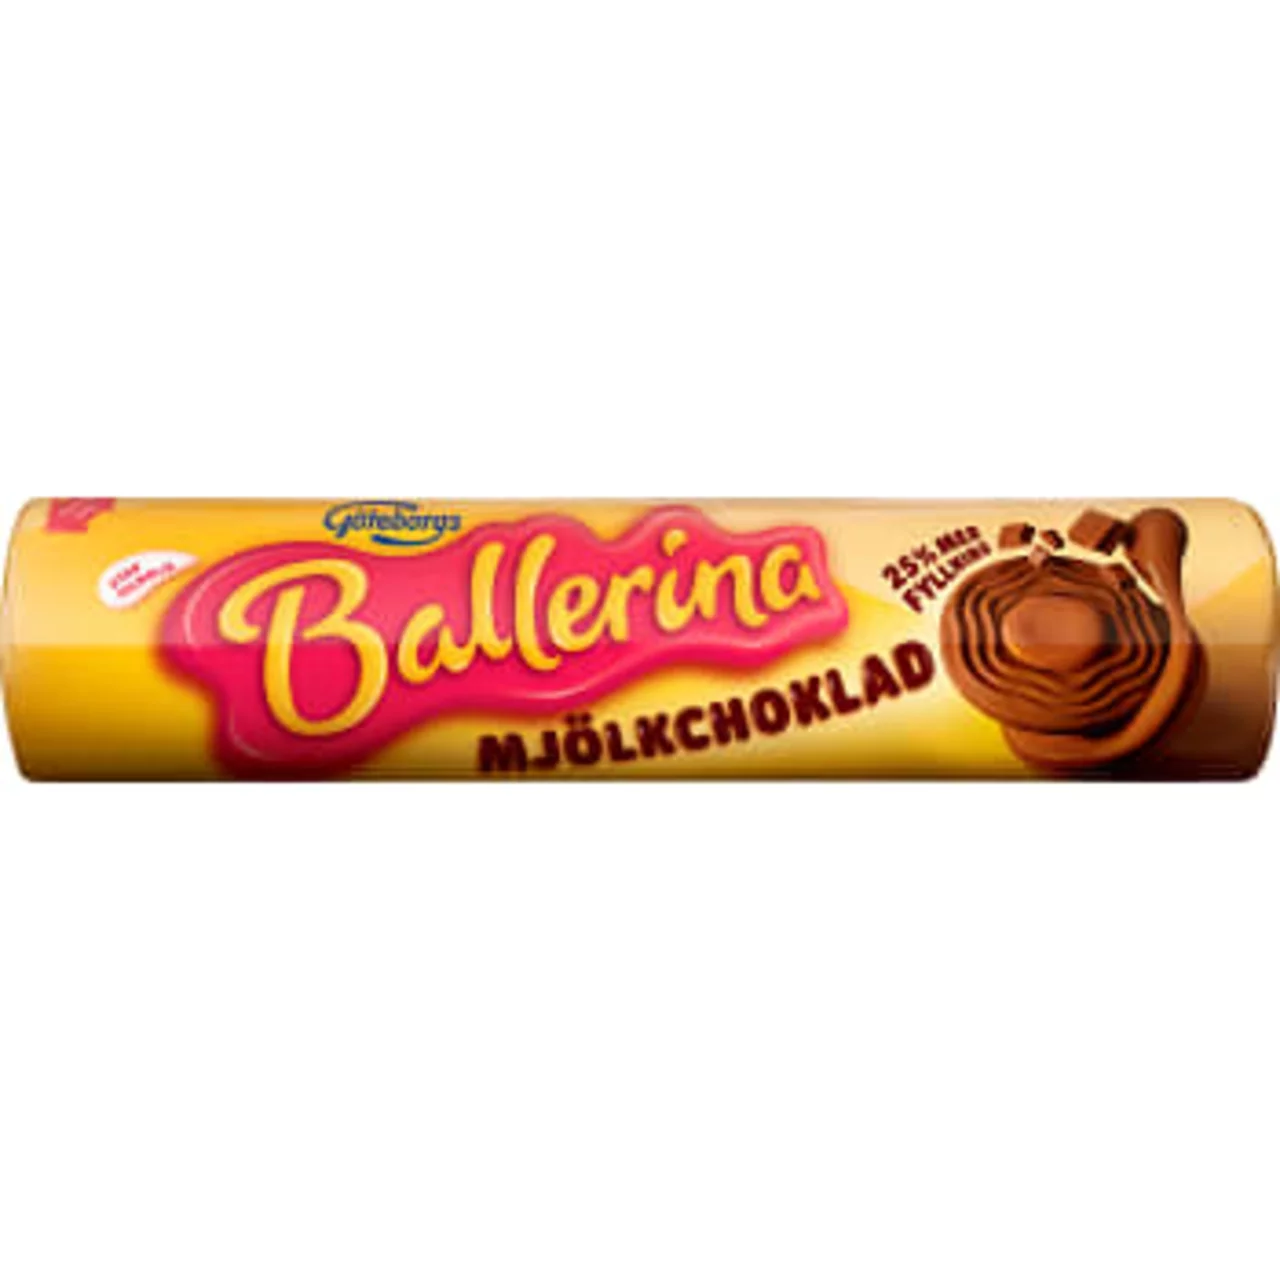 schwedische Lebensmittel Kekse ballerina Mjölkchoklad Milchschokolade